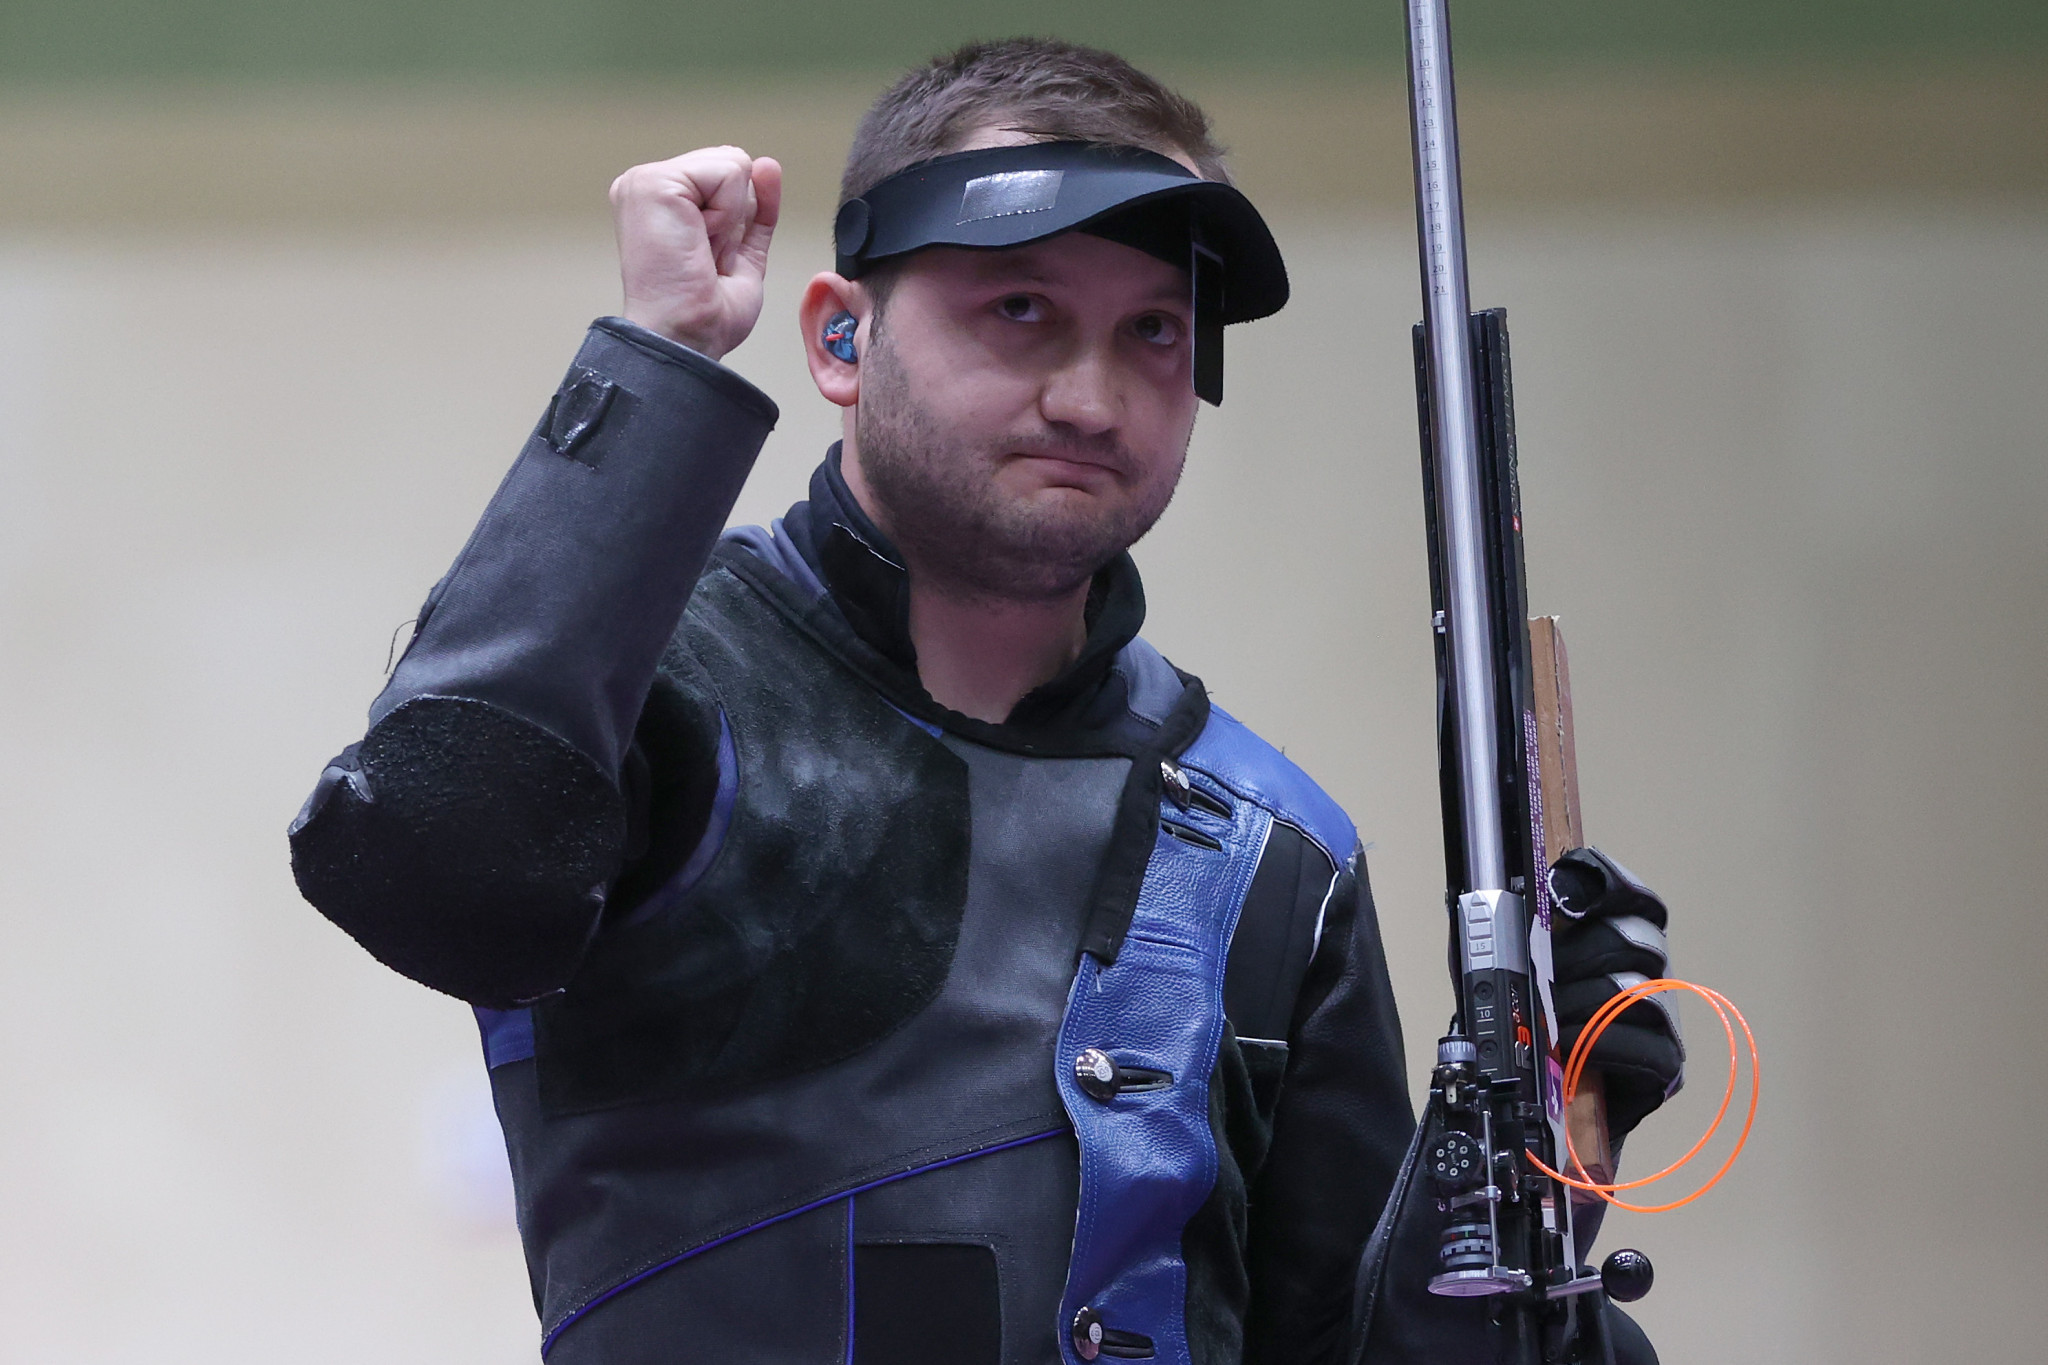 Petar Gorša of Croatia won the men's 10m air rifle gold in Rio ©Getty Images